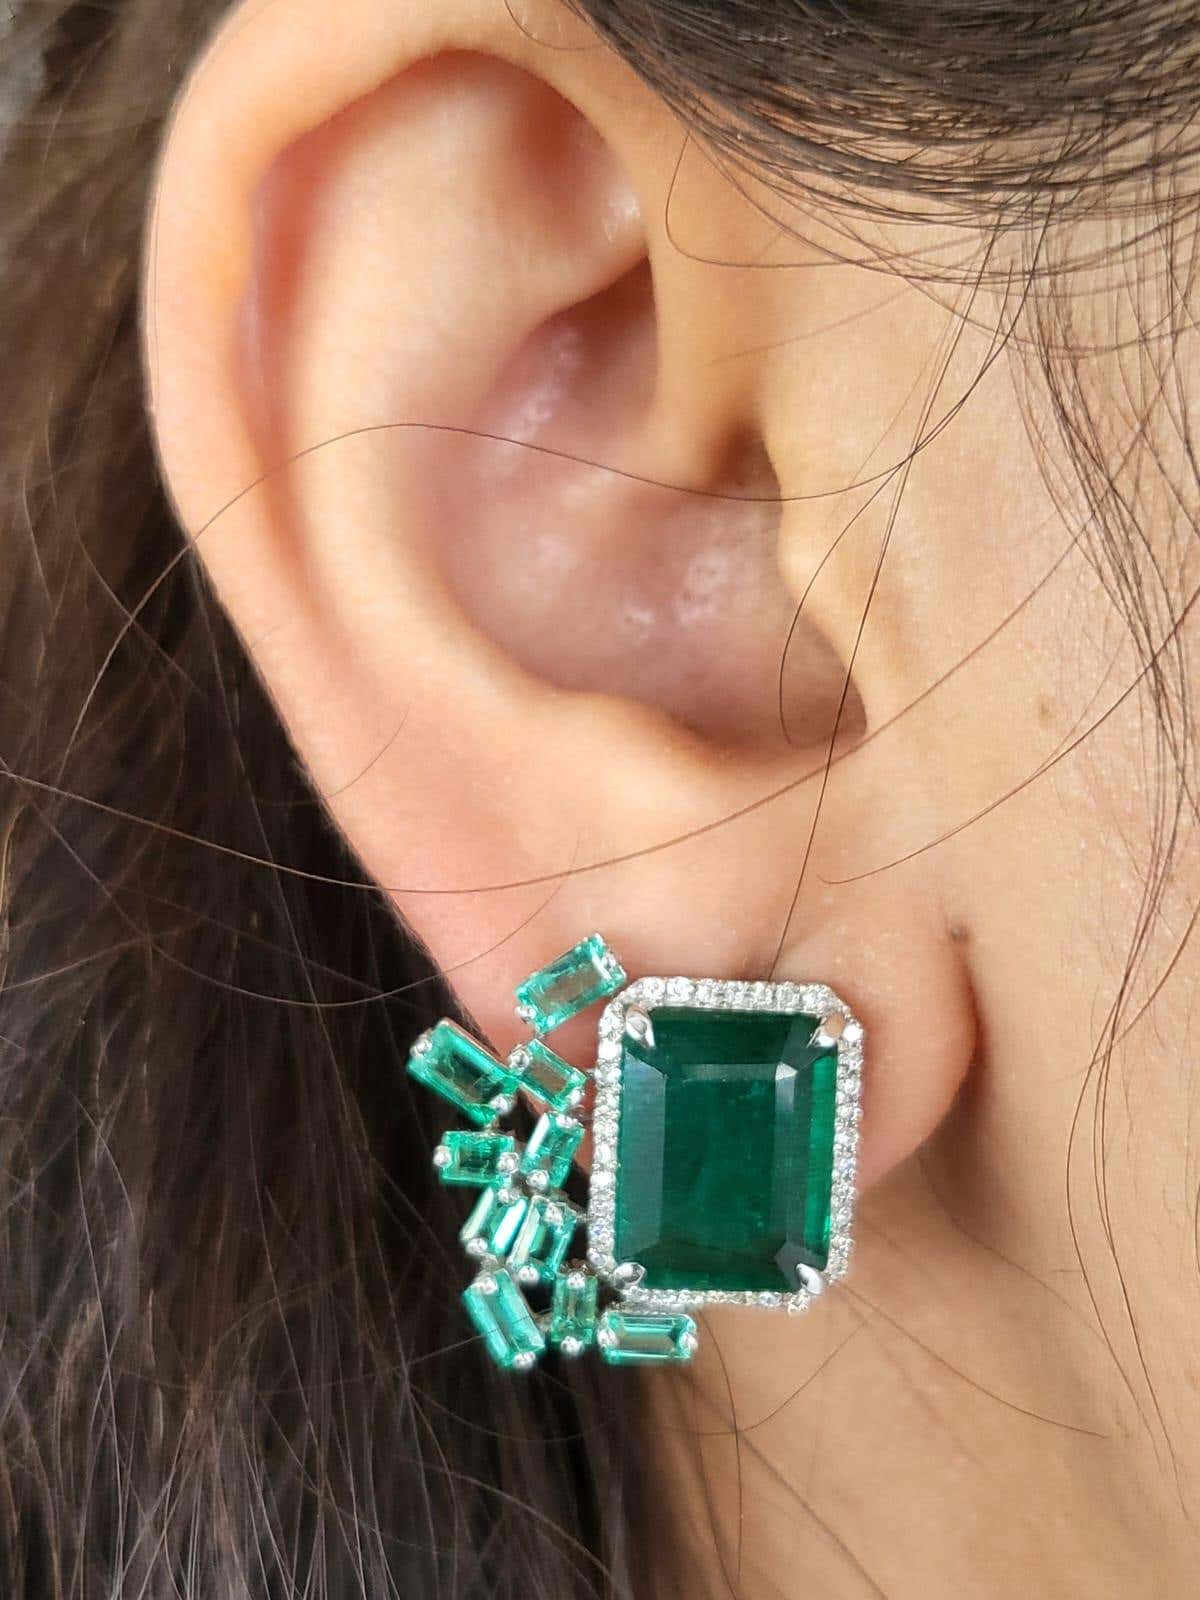 emerald diamond earrings